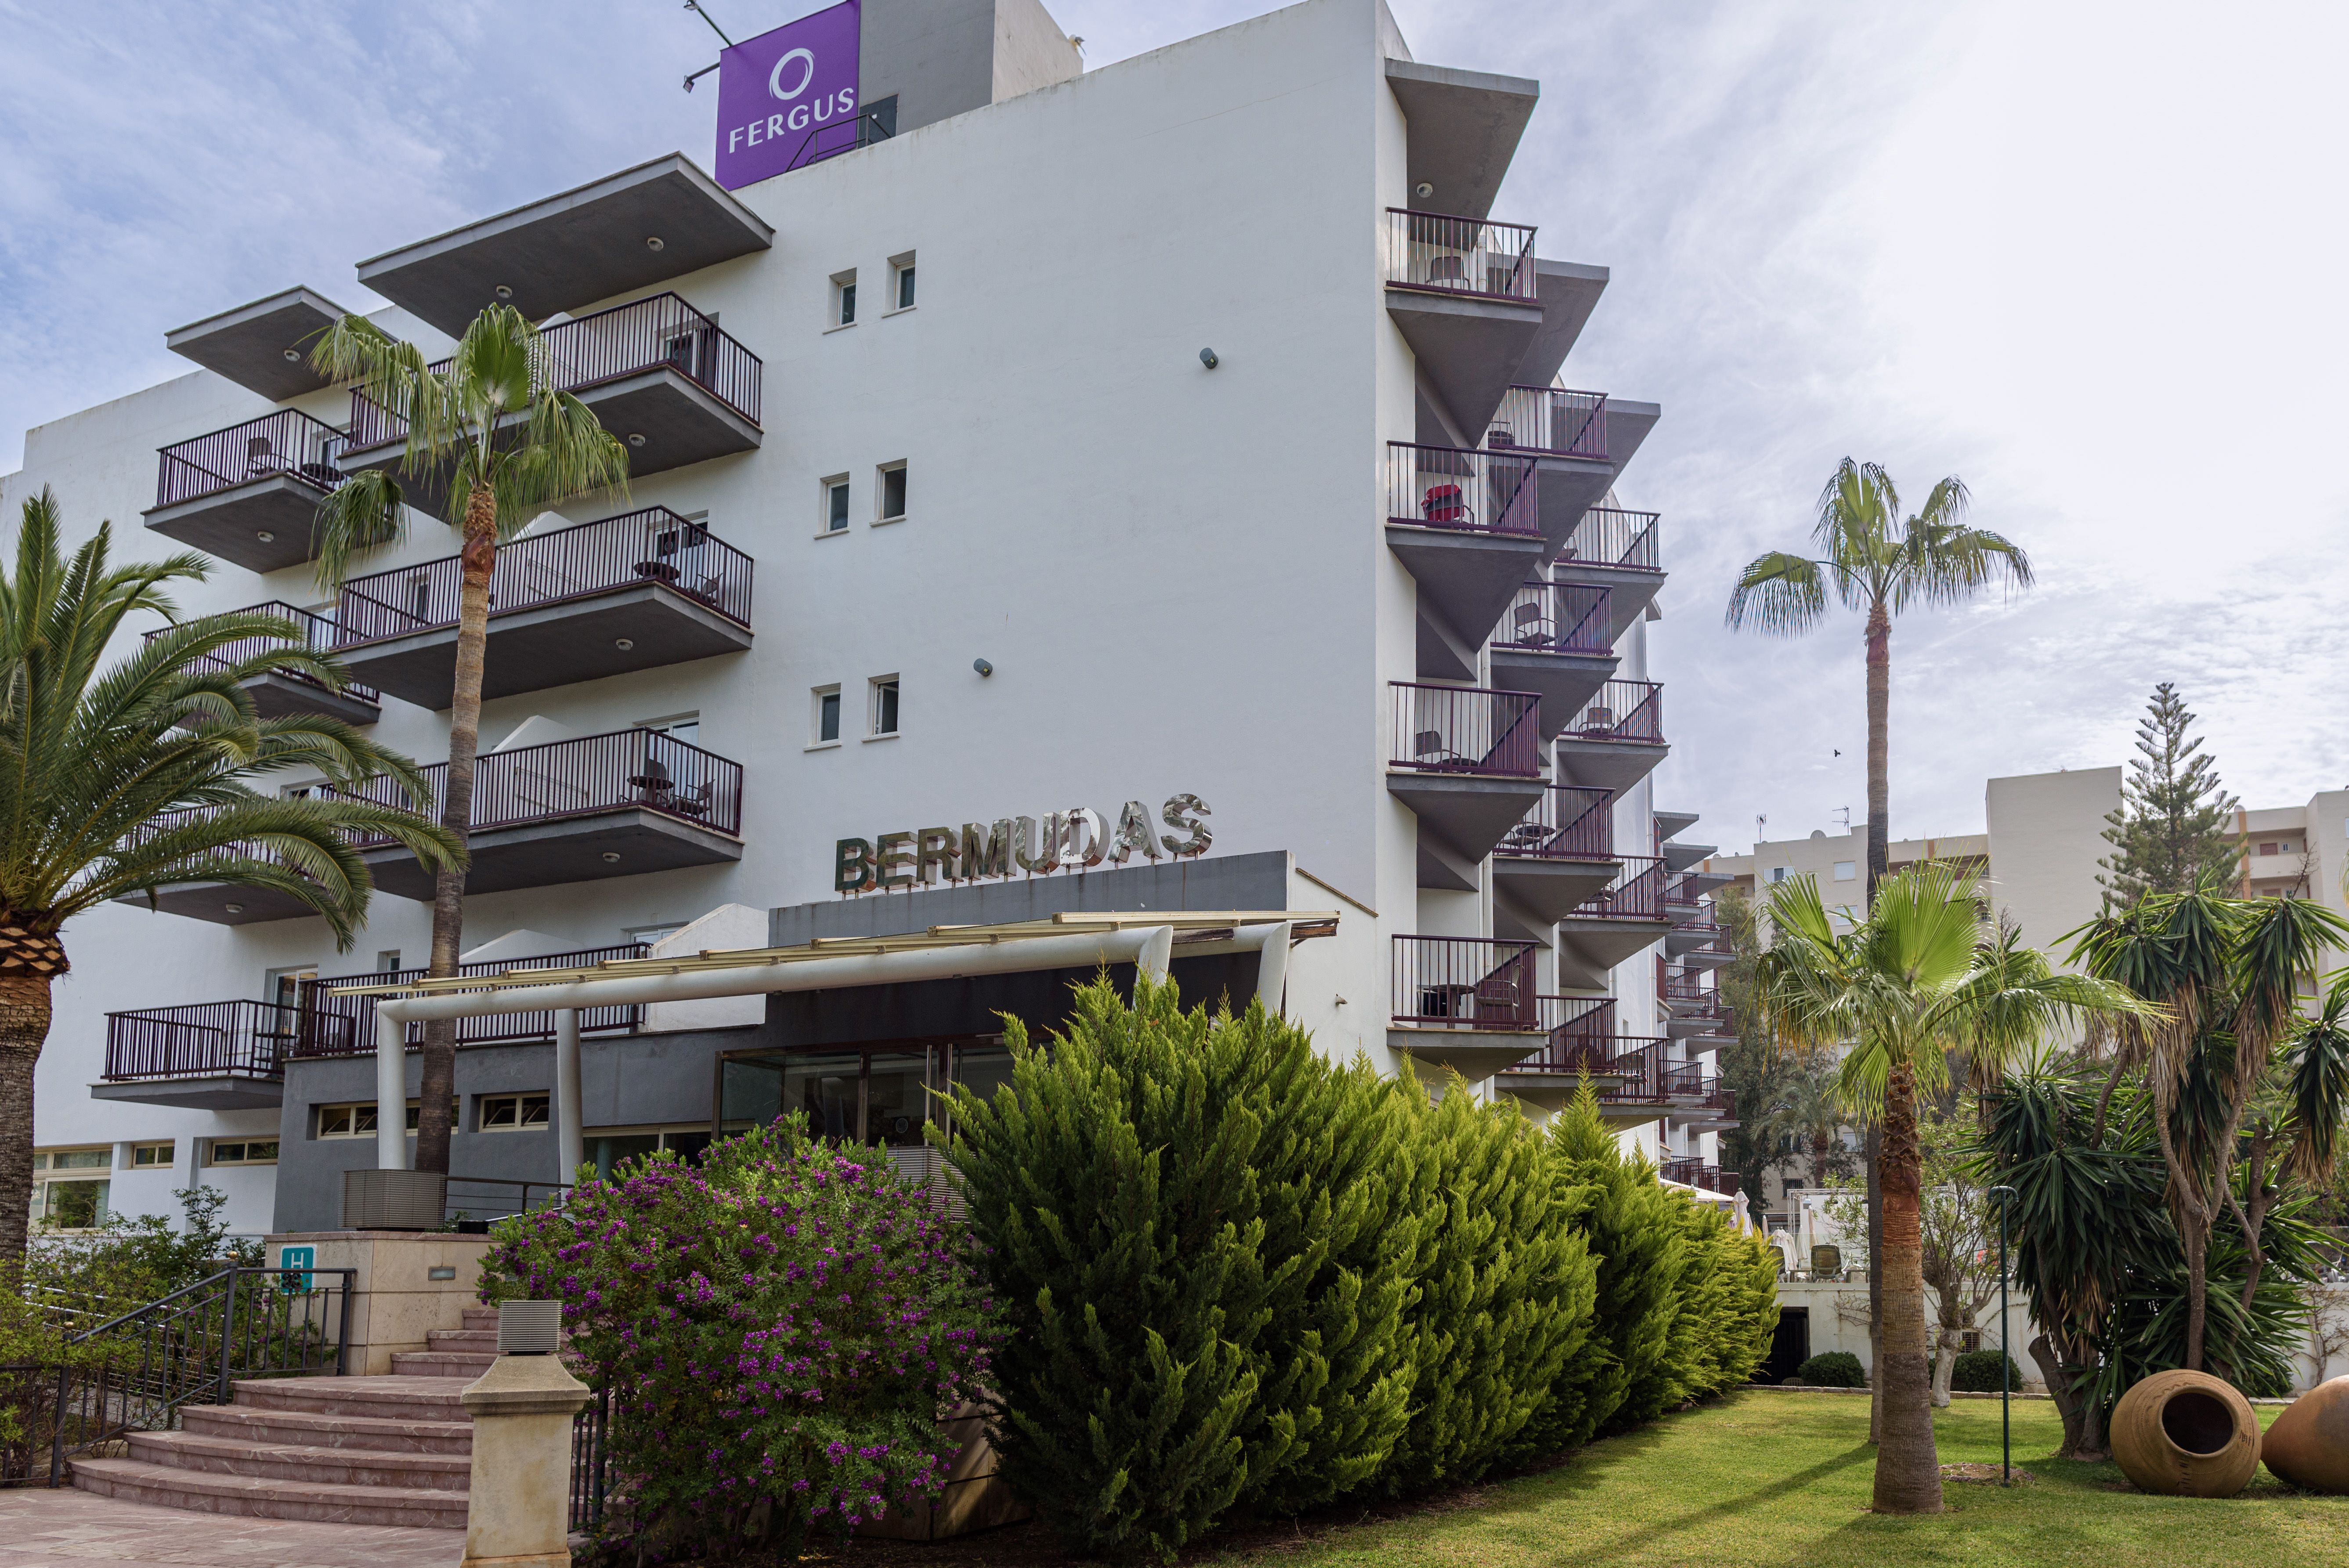 Hotel Fergus Bermudas